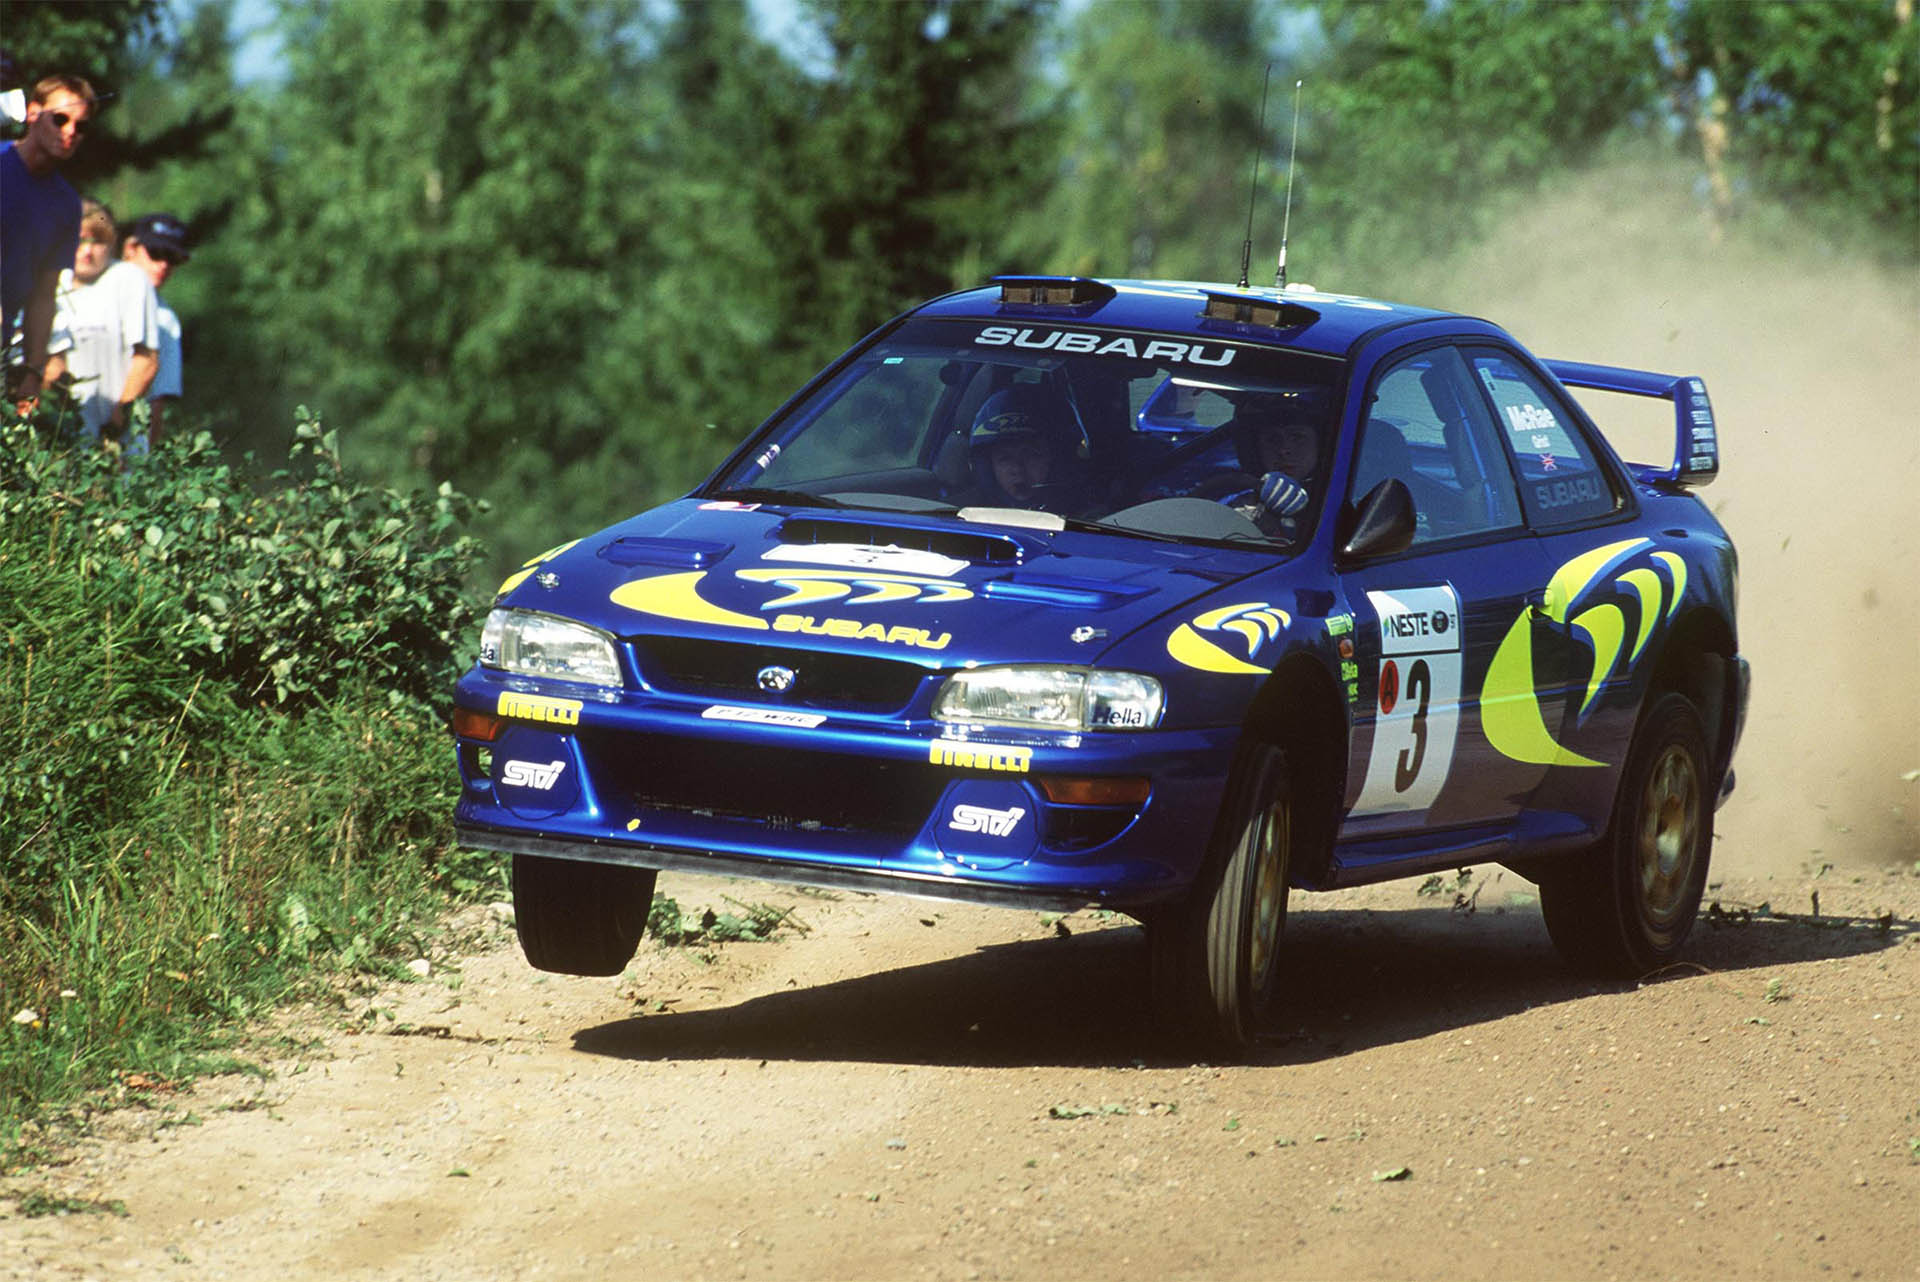 WRC - Colin McRae (Subaru Impreza), Ράλλυ Φινλανδίας 1997